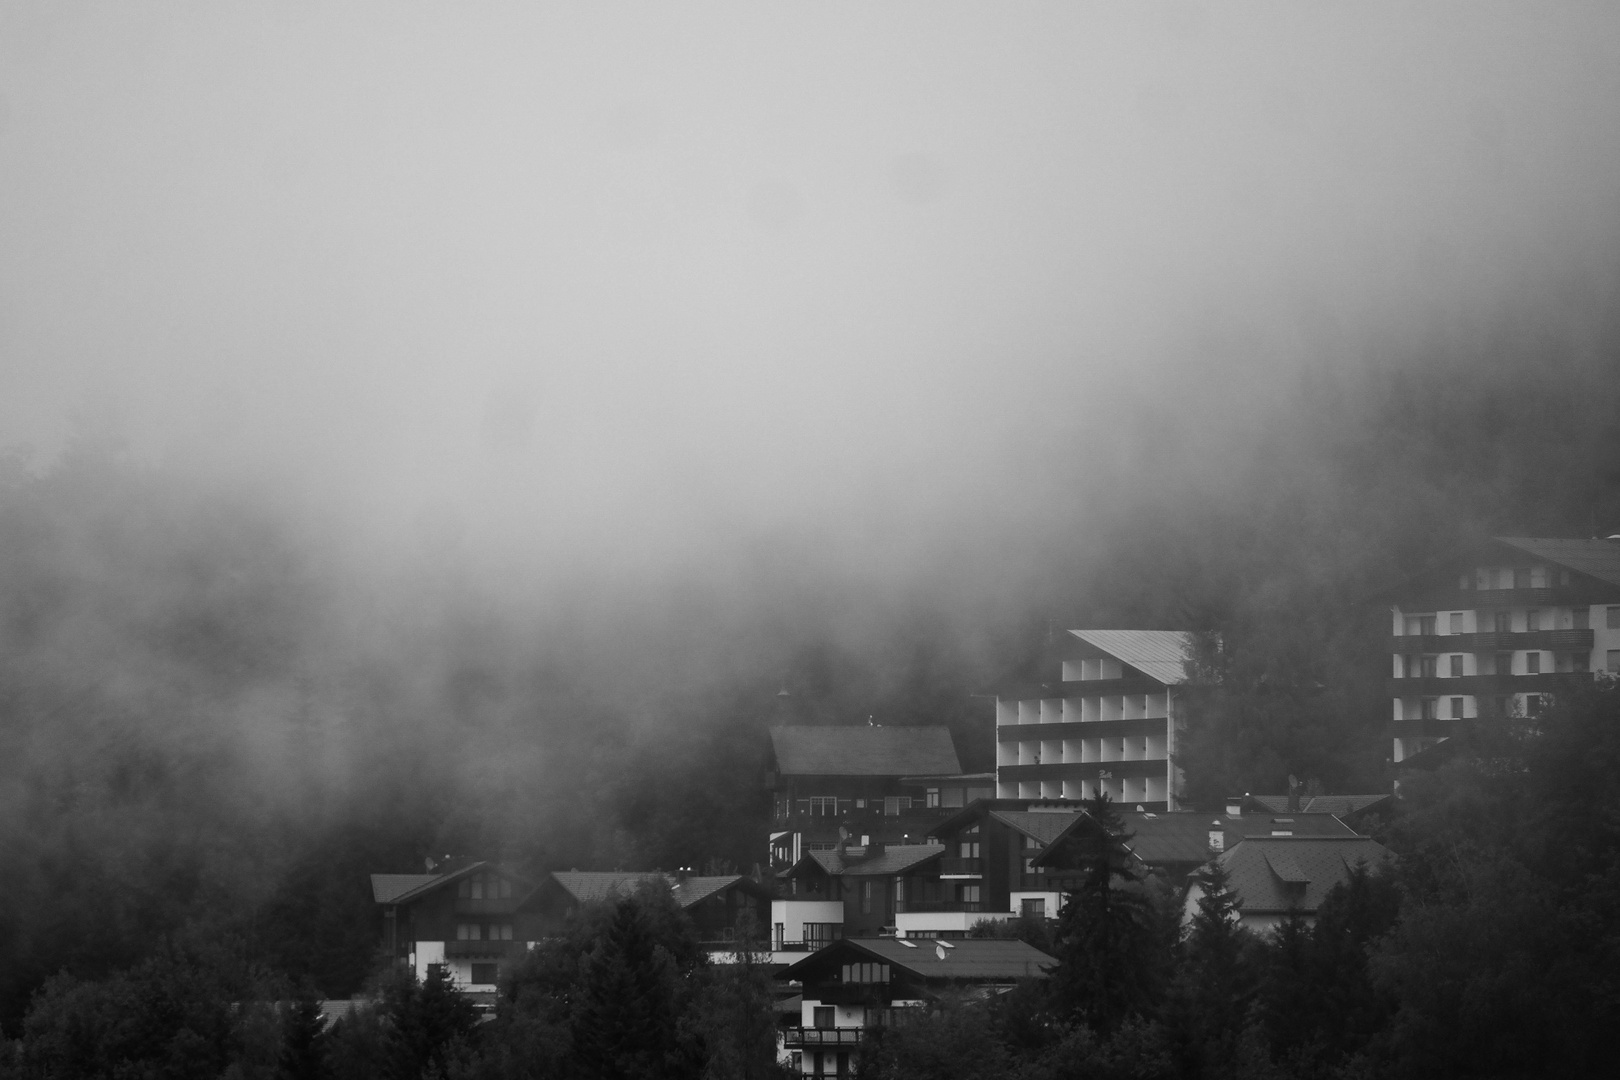 Nebel über dem Tal